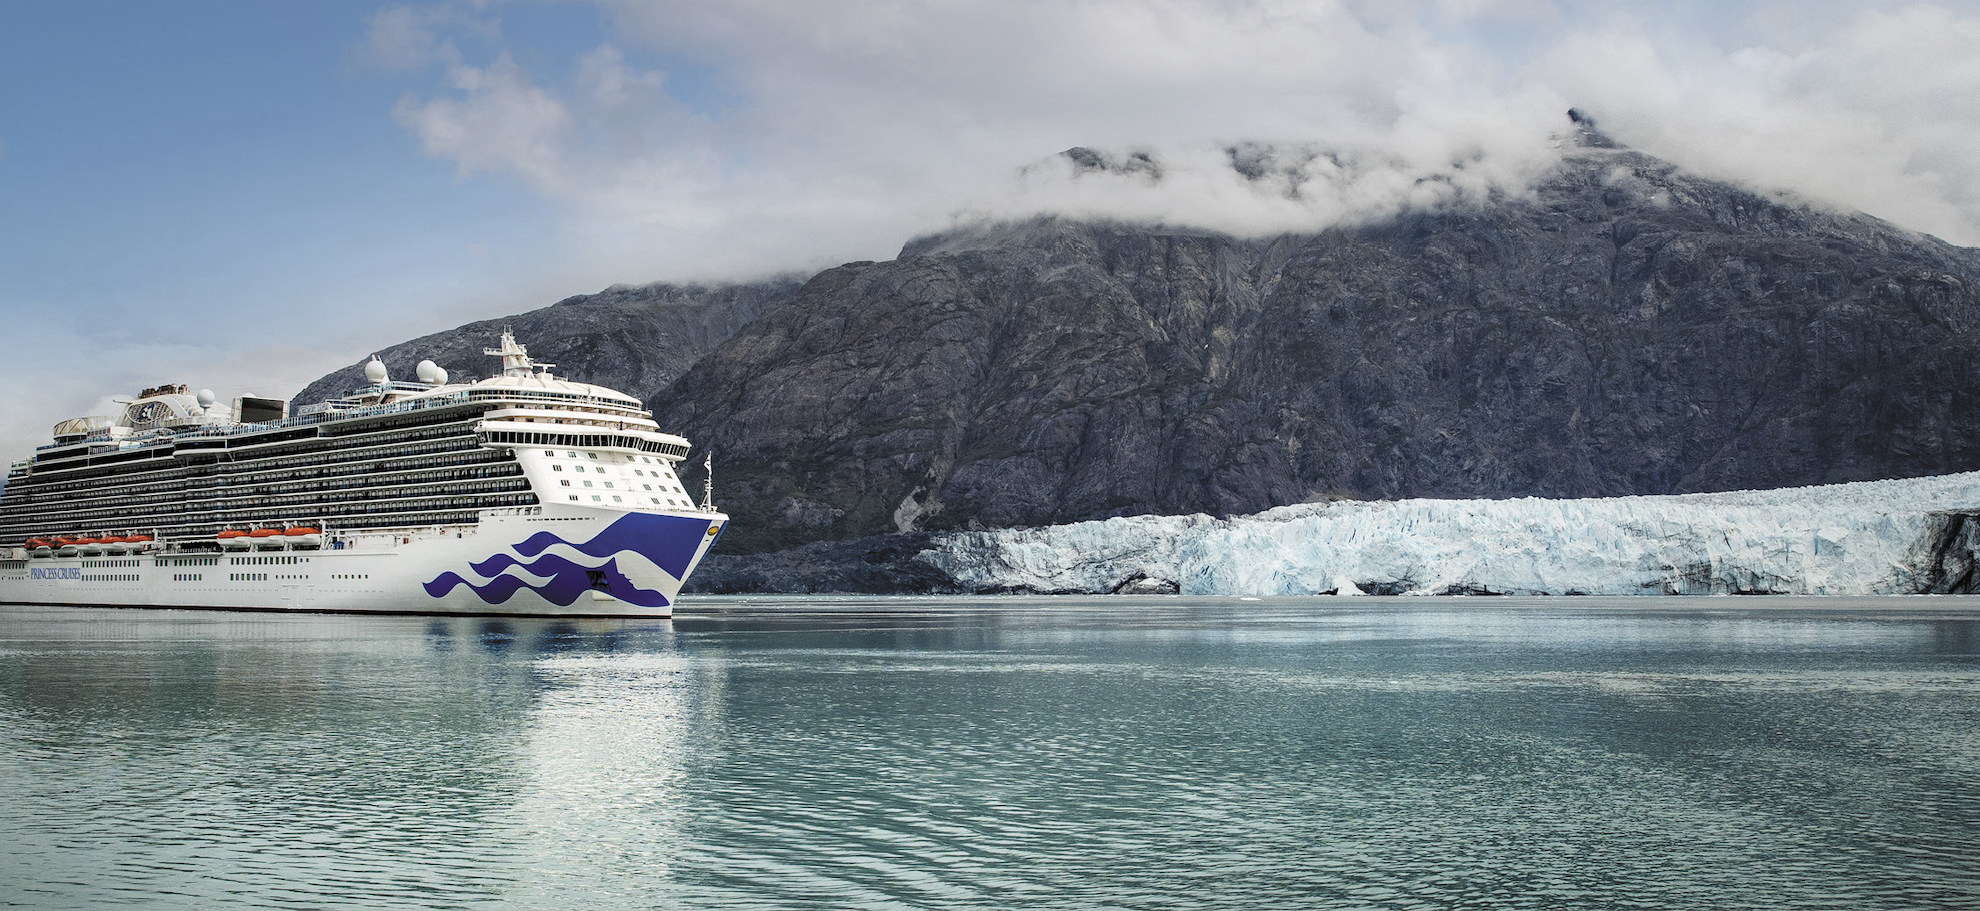 TripCast360 | Princess Cruises Heads to Alaska